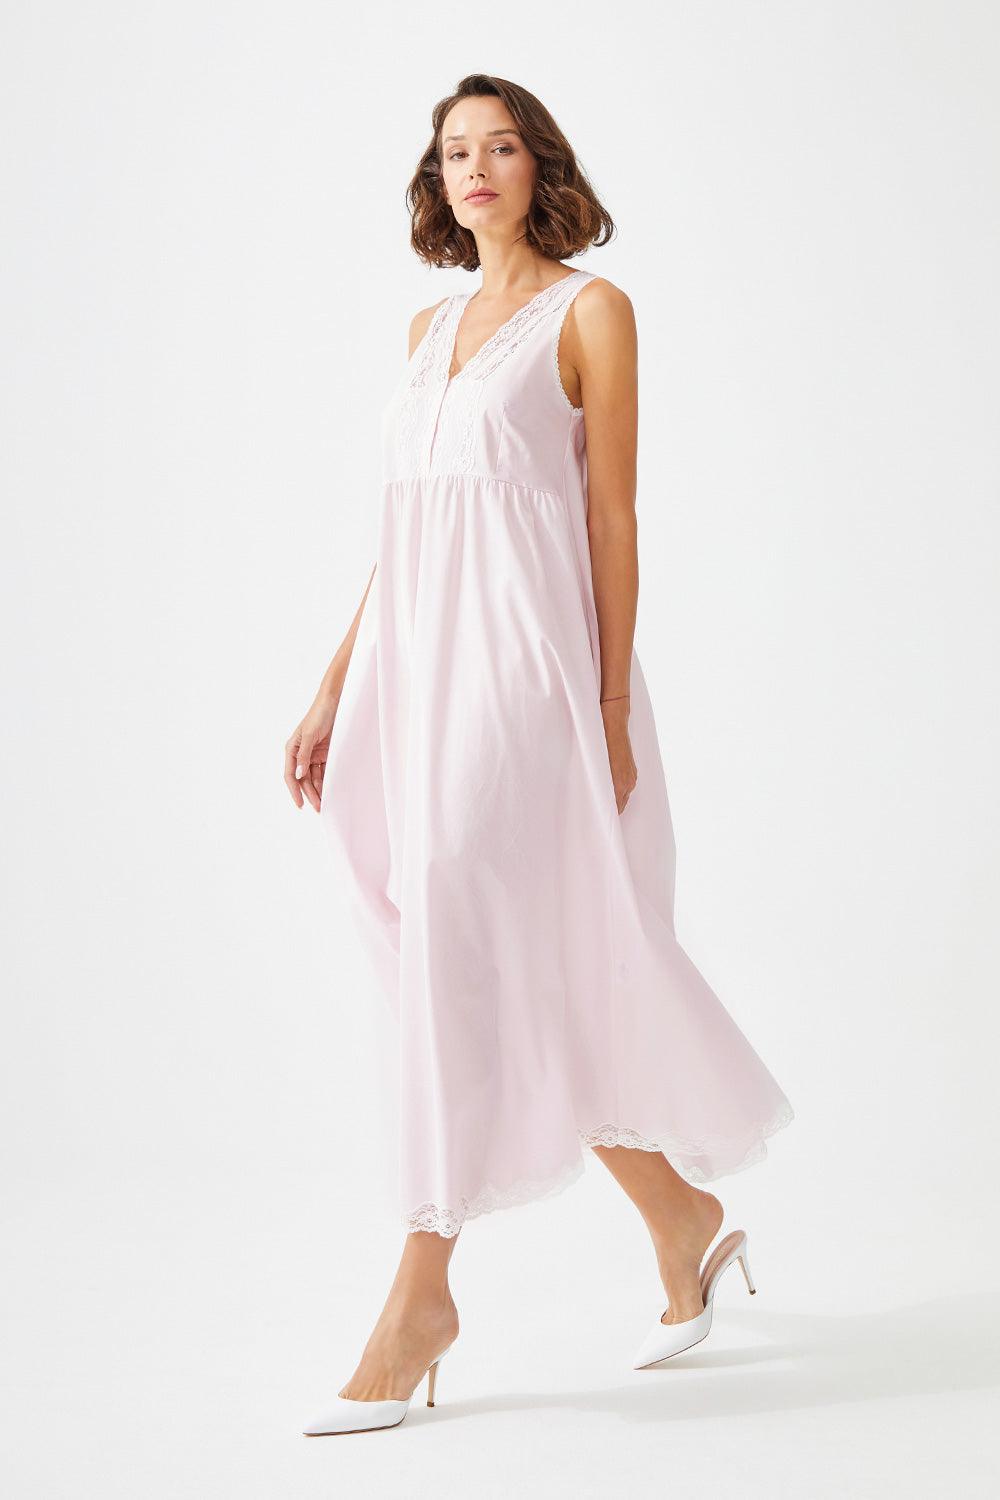 Quartz Long Cotton Voile Sleeveless Inner Nightgown - Baby Pink - Bocan